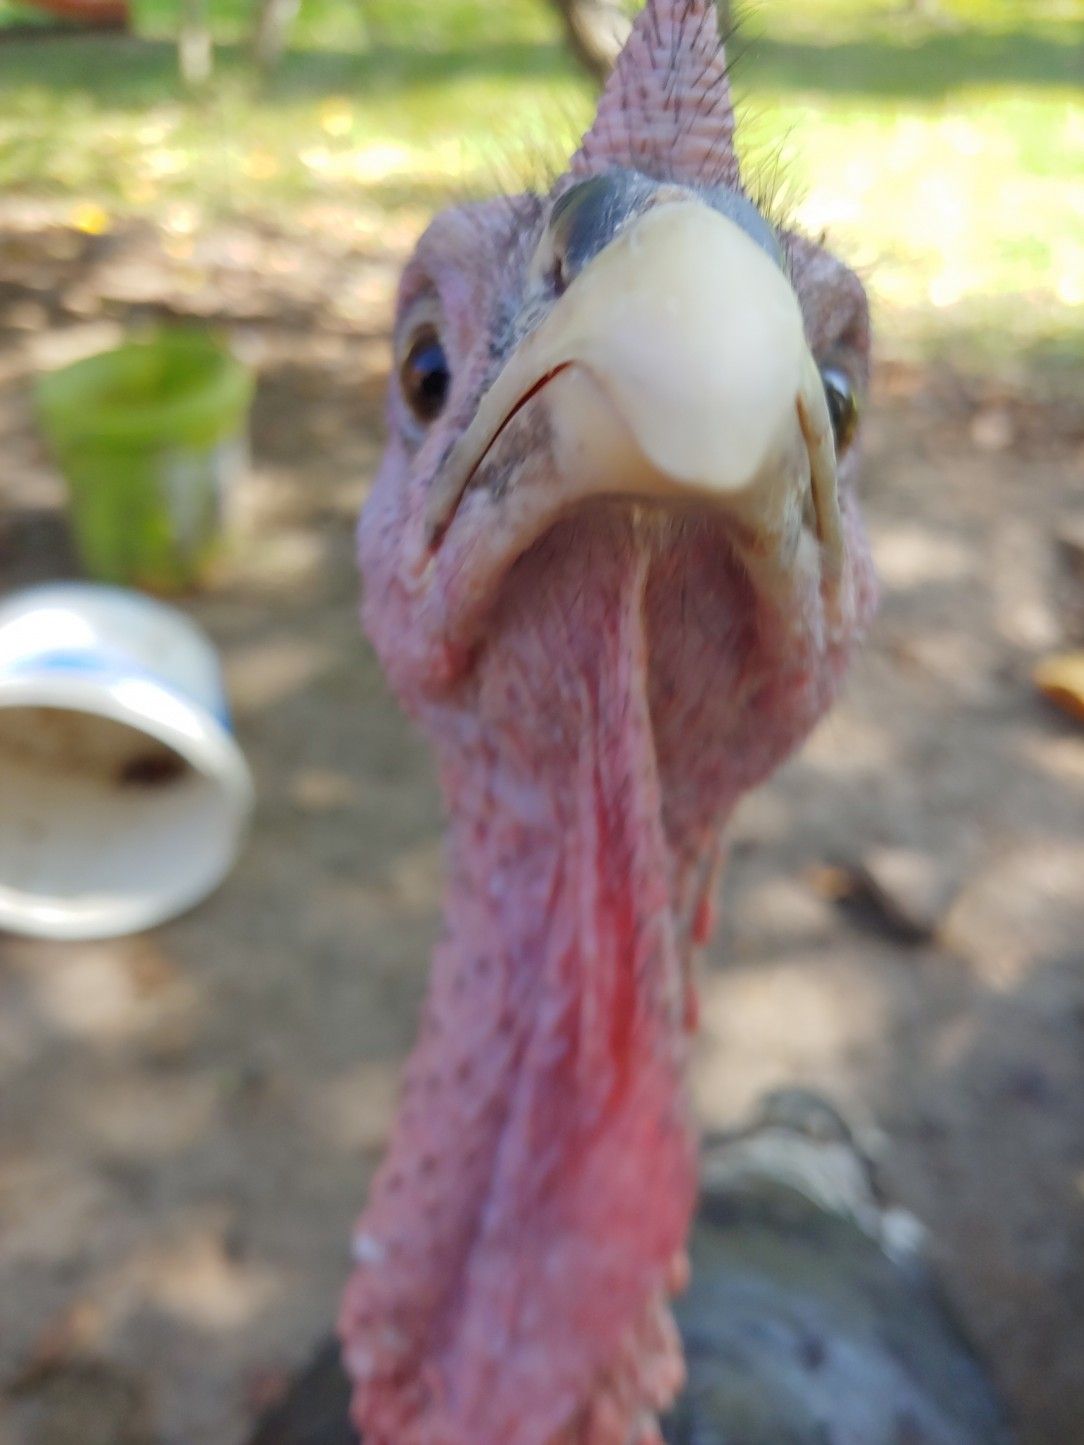 Skeptical turkey is skeptical